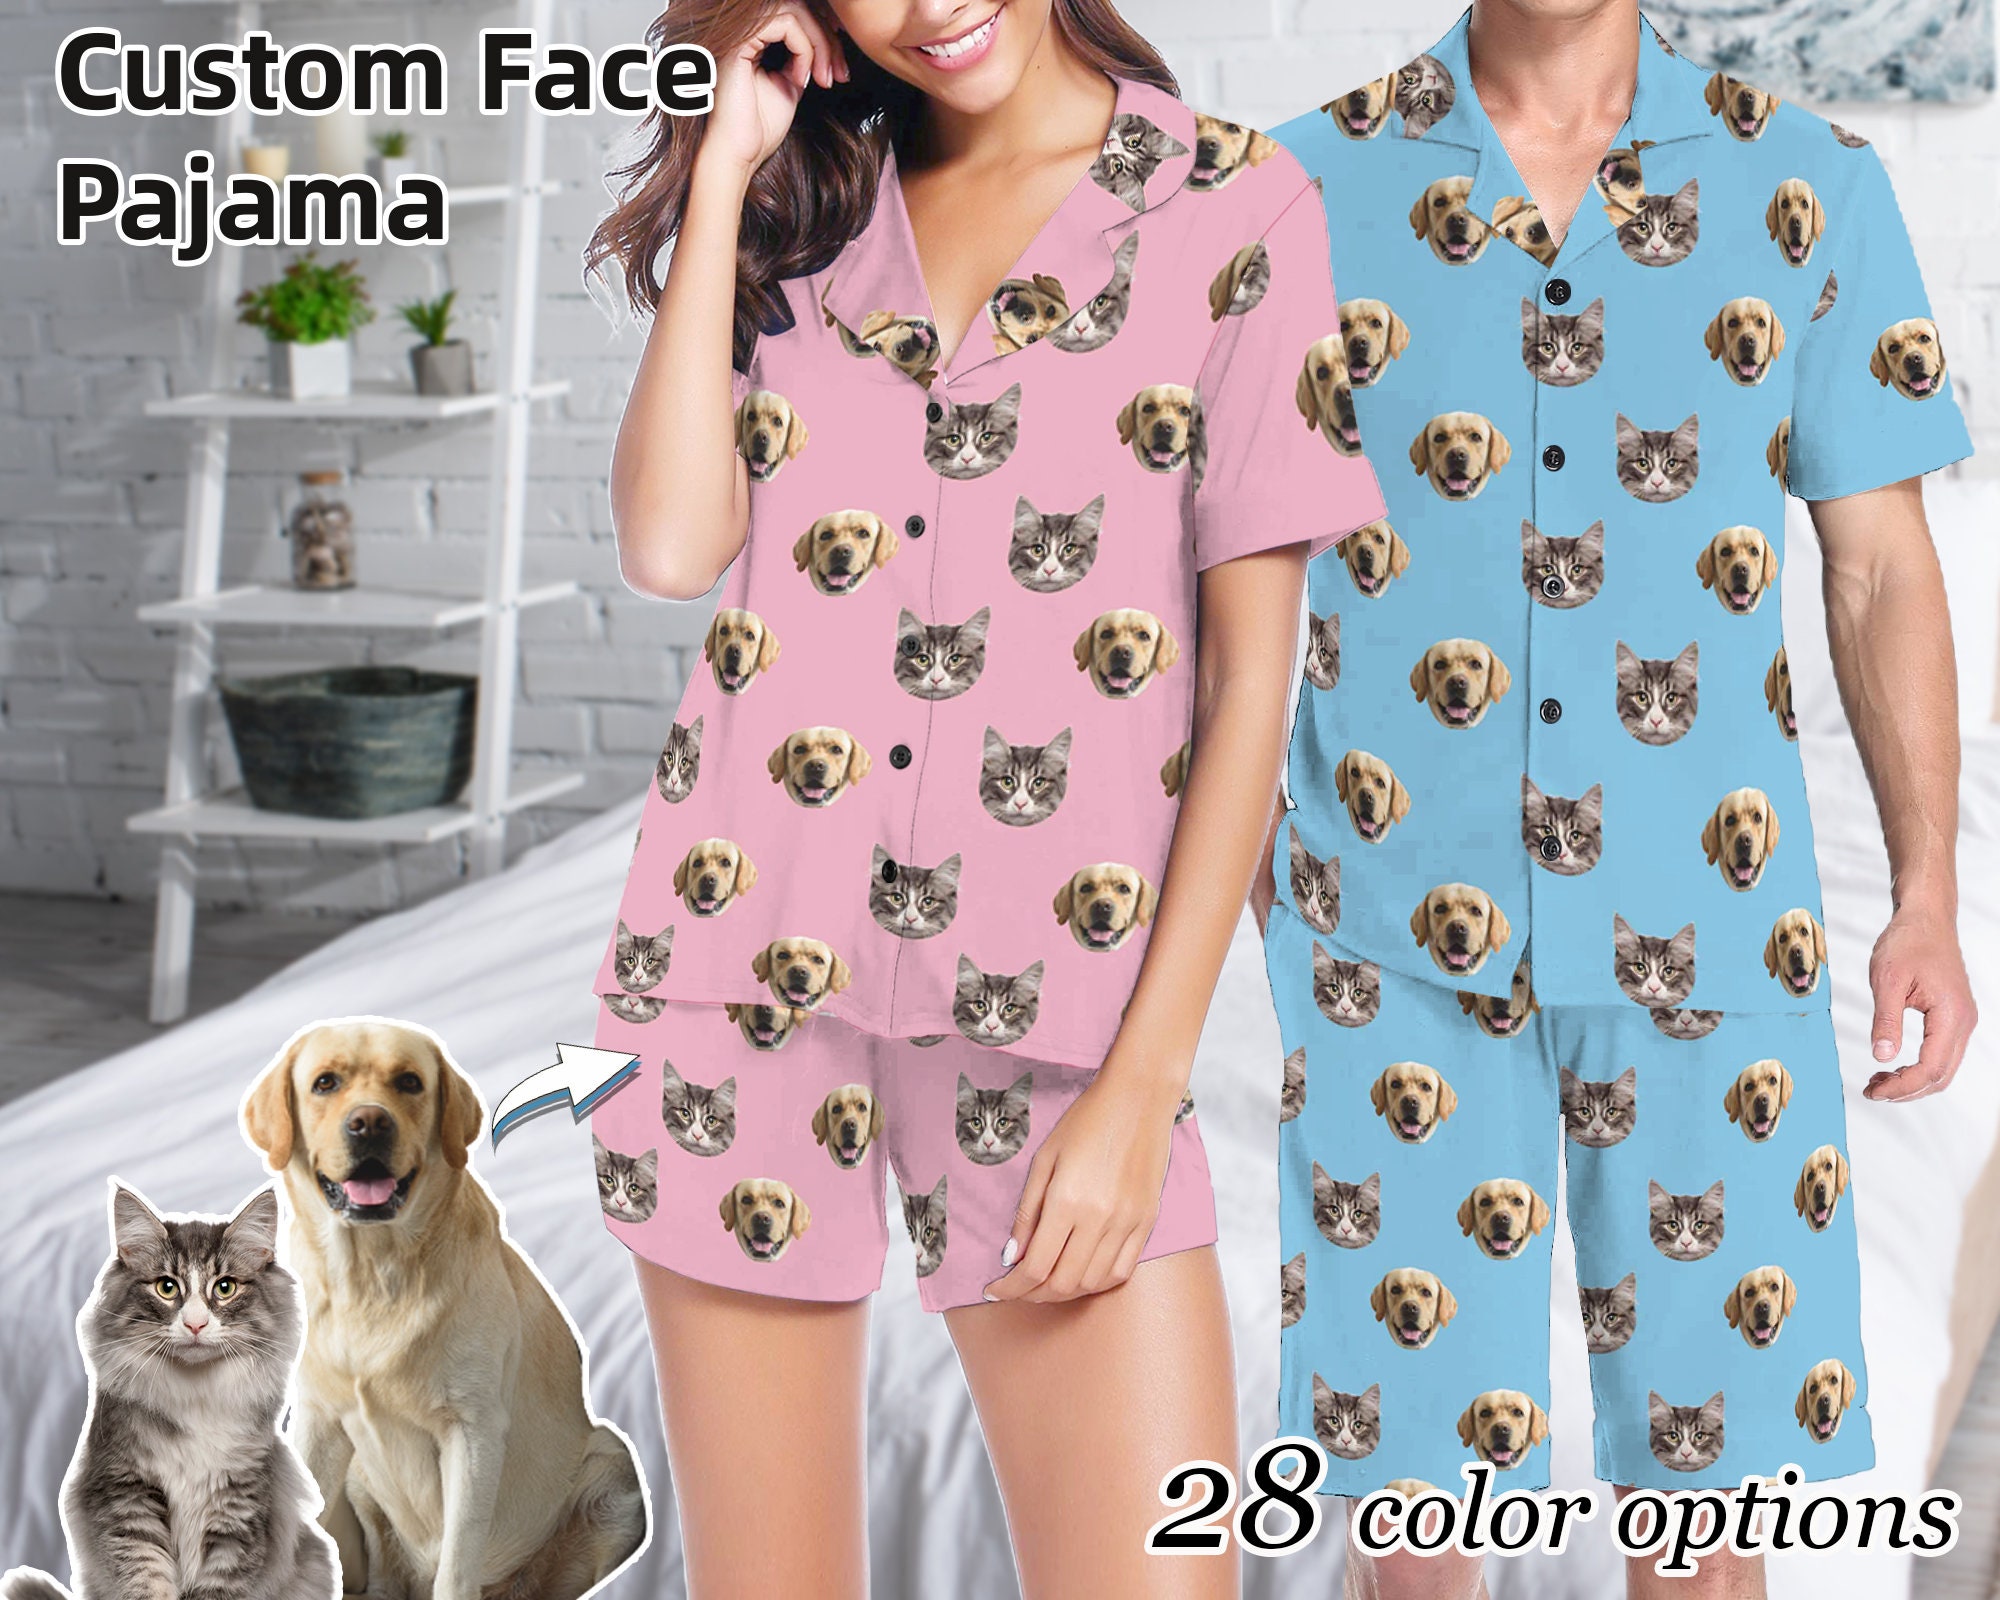 Custom Face Photo Camo Background Pajamas For Christmas Gift N304 888782